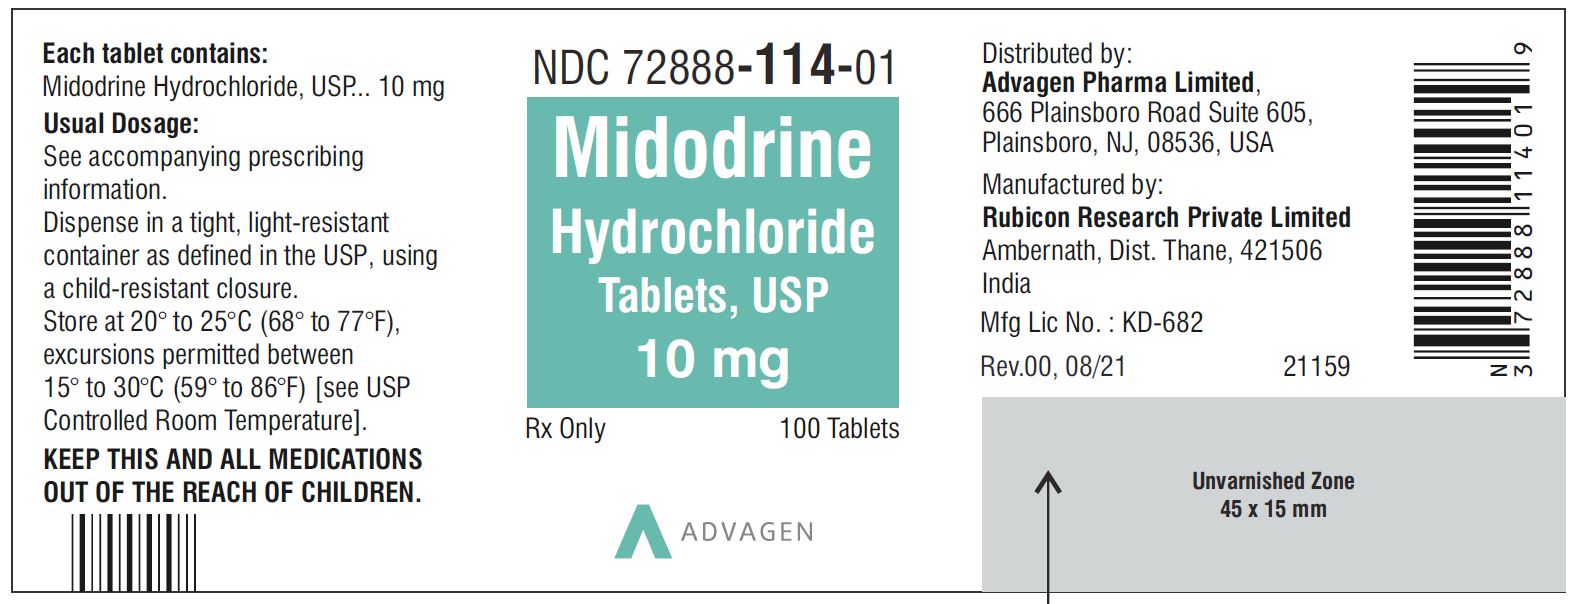 Midodrine Hydrochloride Tablets, USP 10mg - 100 Tablets - NDC 72888-114-01